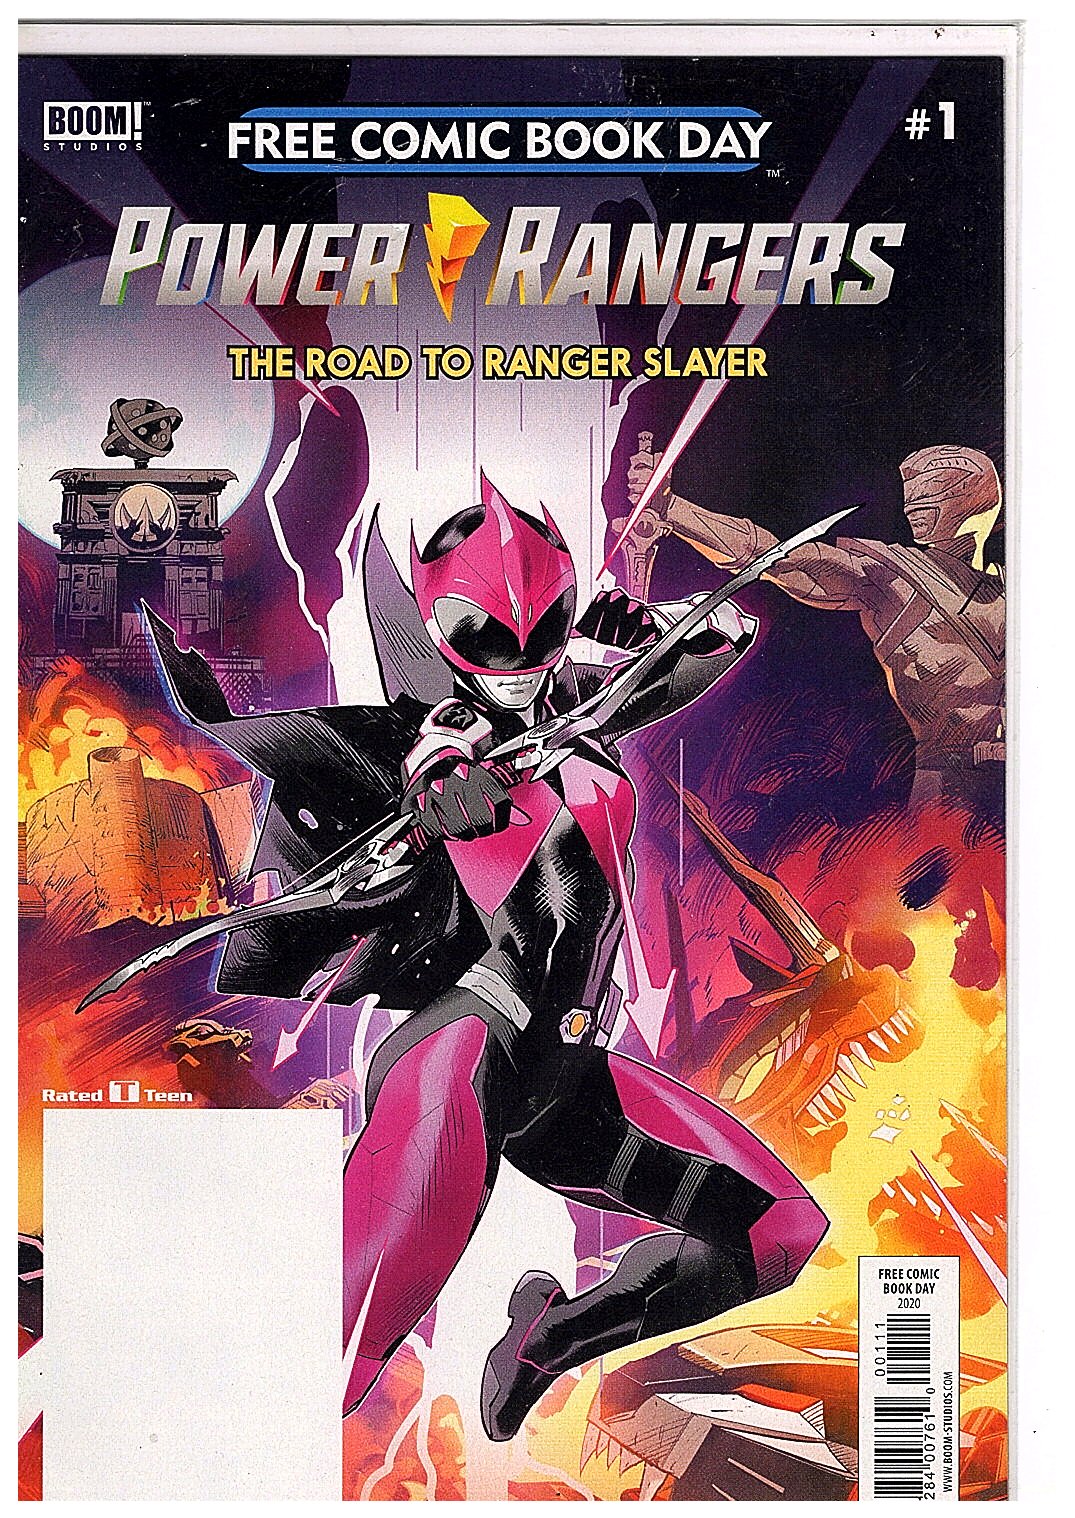 Power Rangers #1 (FCBD)